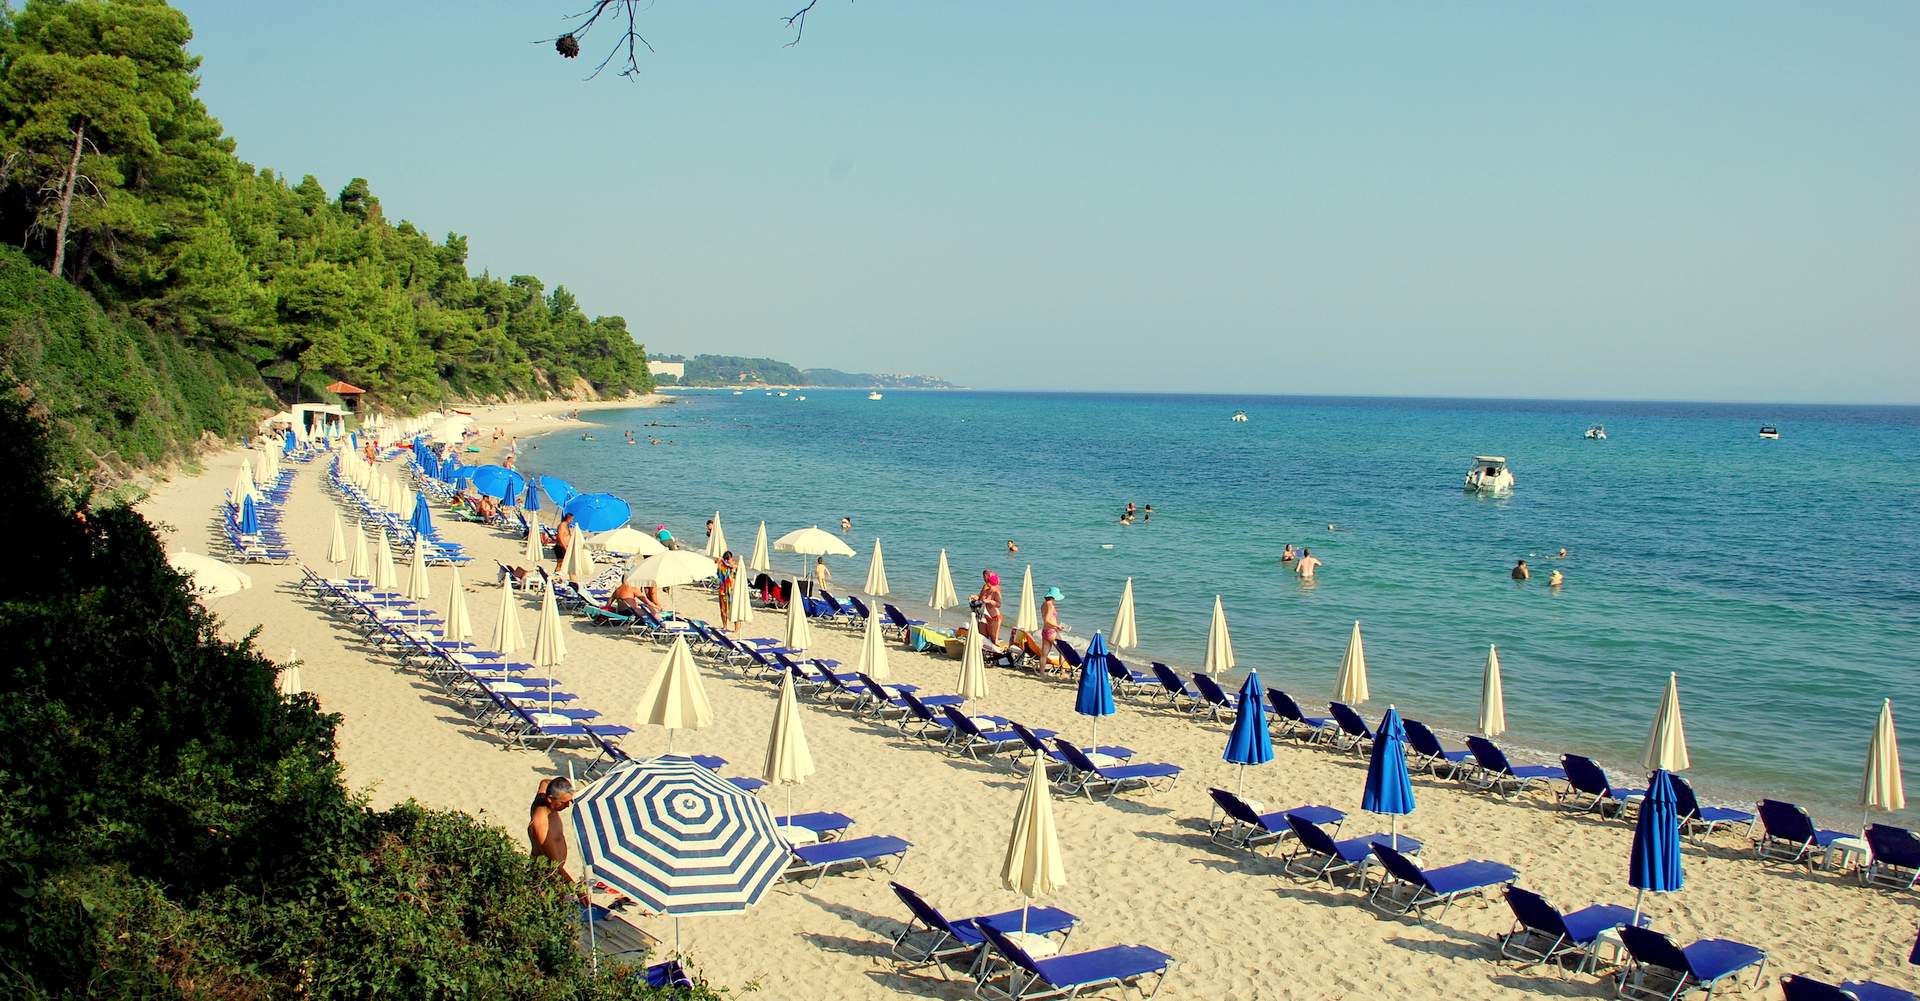 Kriopigi or Pigadakia beach, Kassandra, Halkidiki, Greece